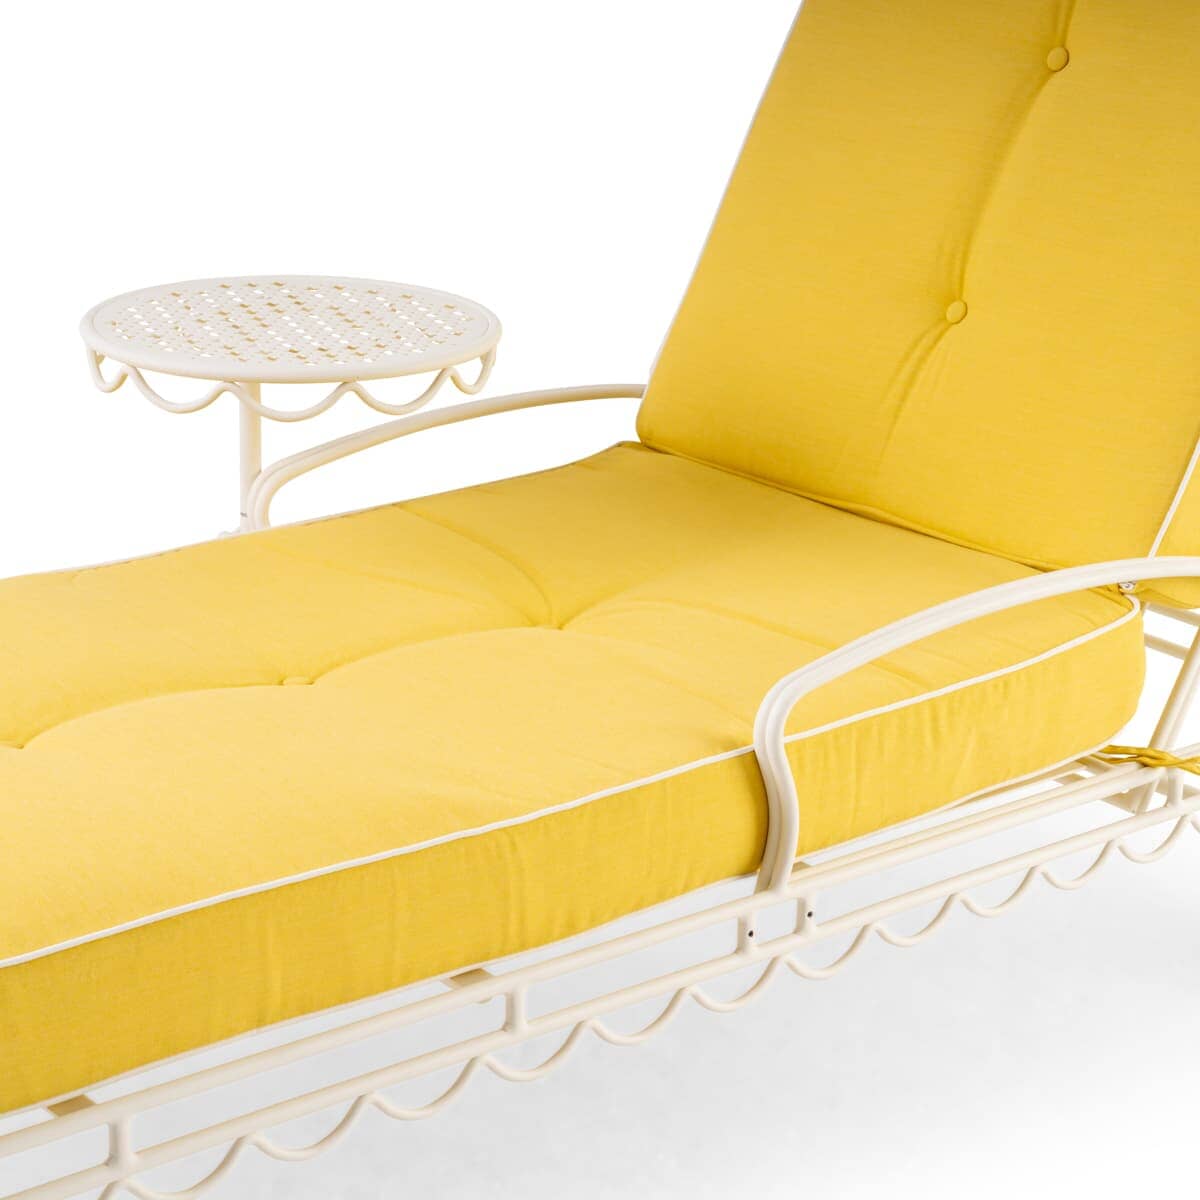 Studio image of riviera mimosa sun lounger cushion